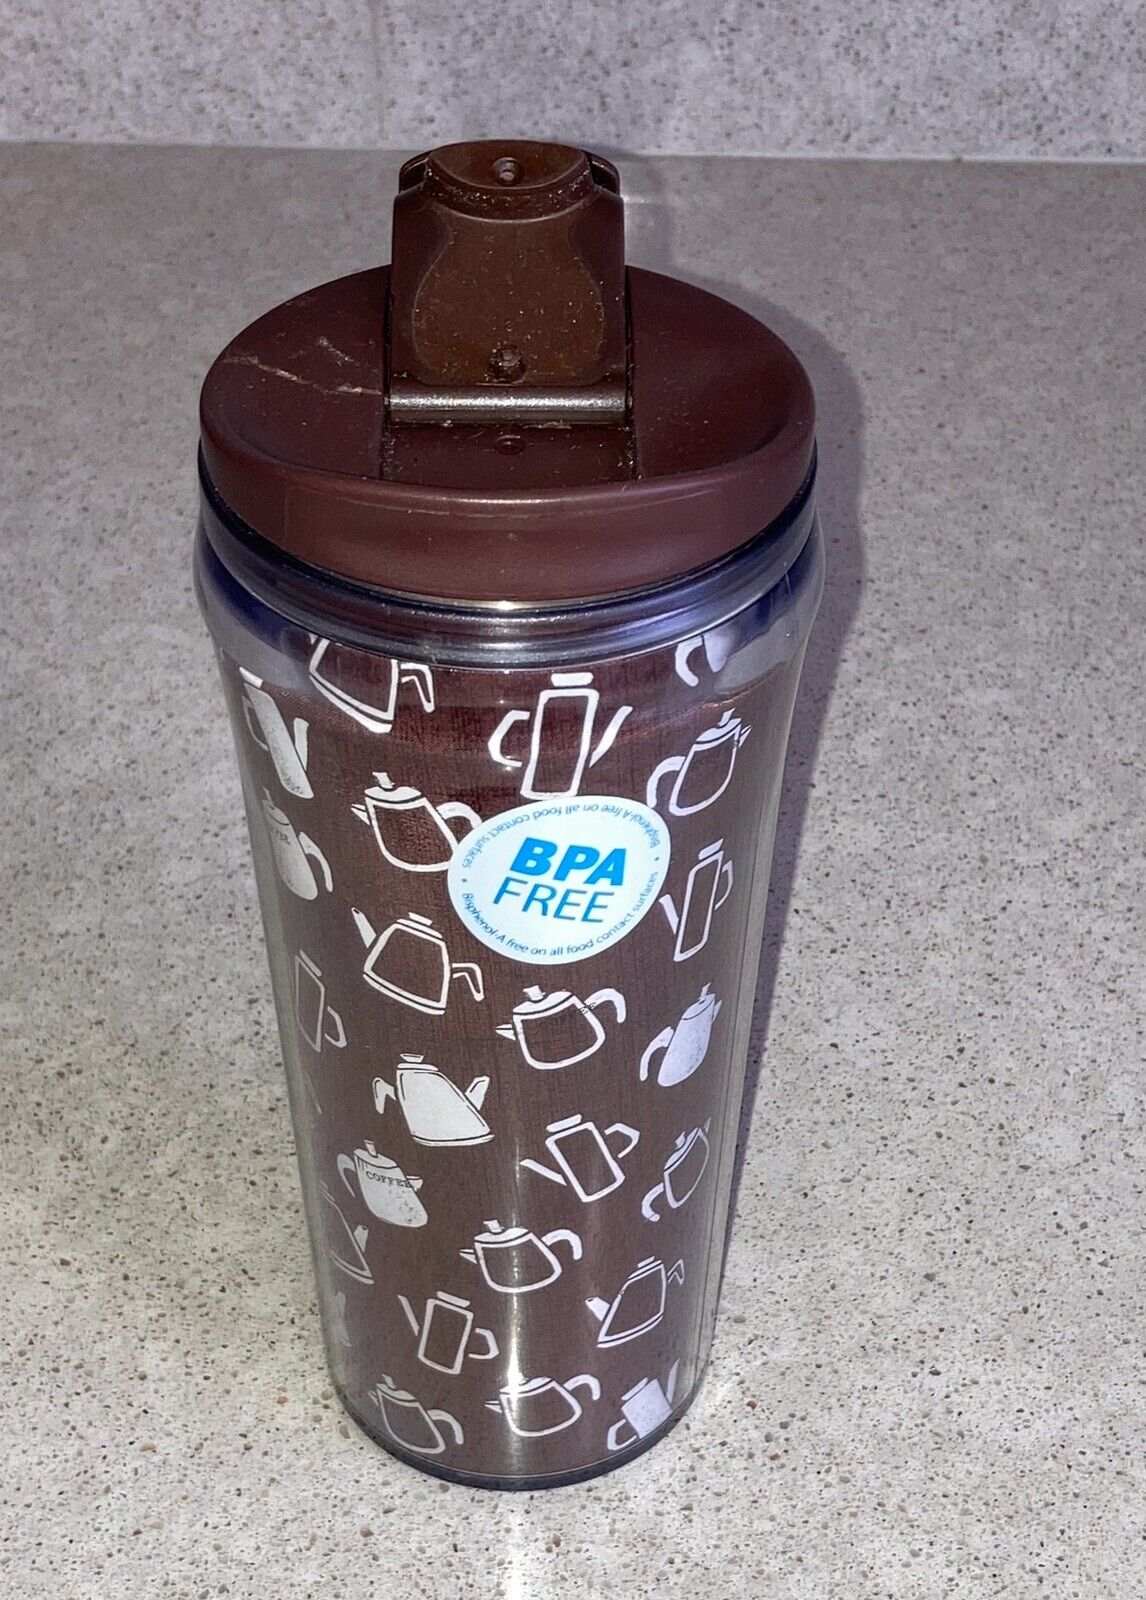 ALADDIN 16 oz PLASTIC INSULATED TRAVEL CUP COFFEE POT PERCOLATOR THEME BPA FREE